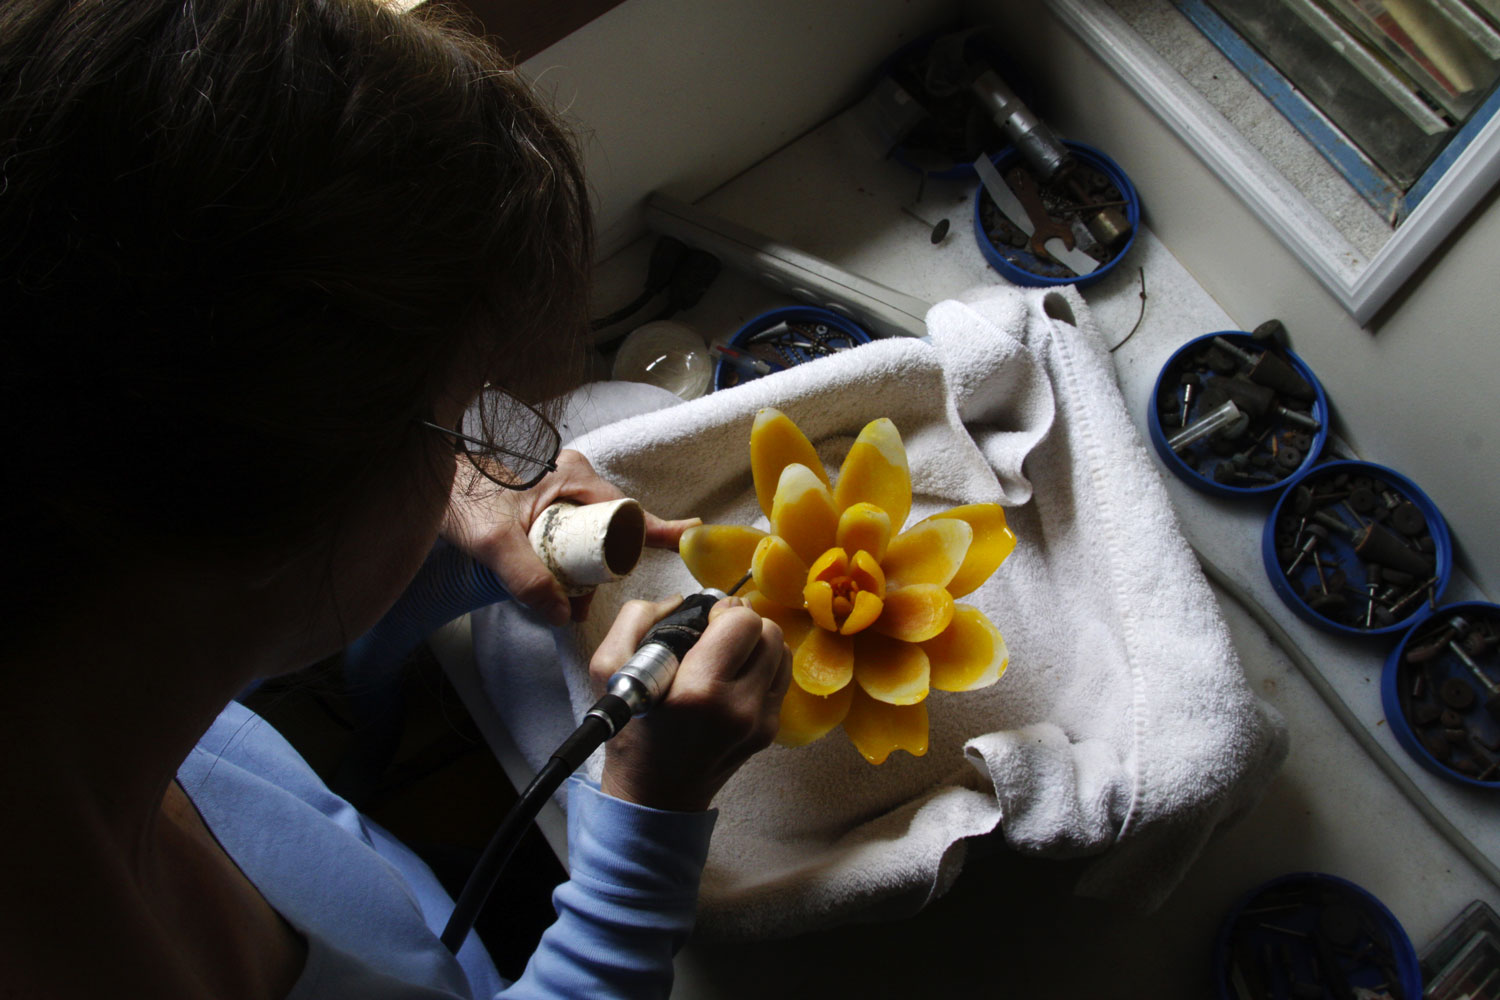 A woman works on a glass flower sculpture